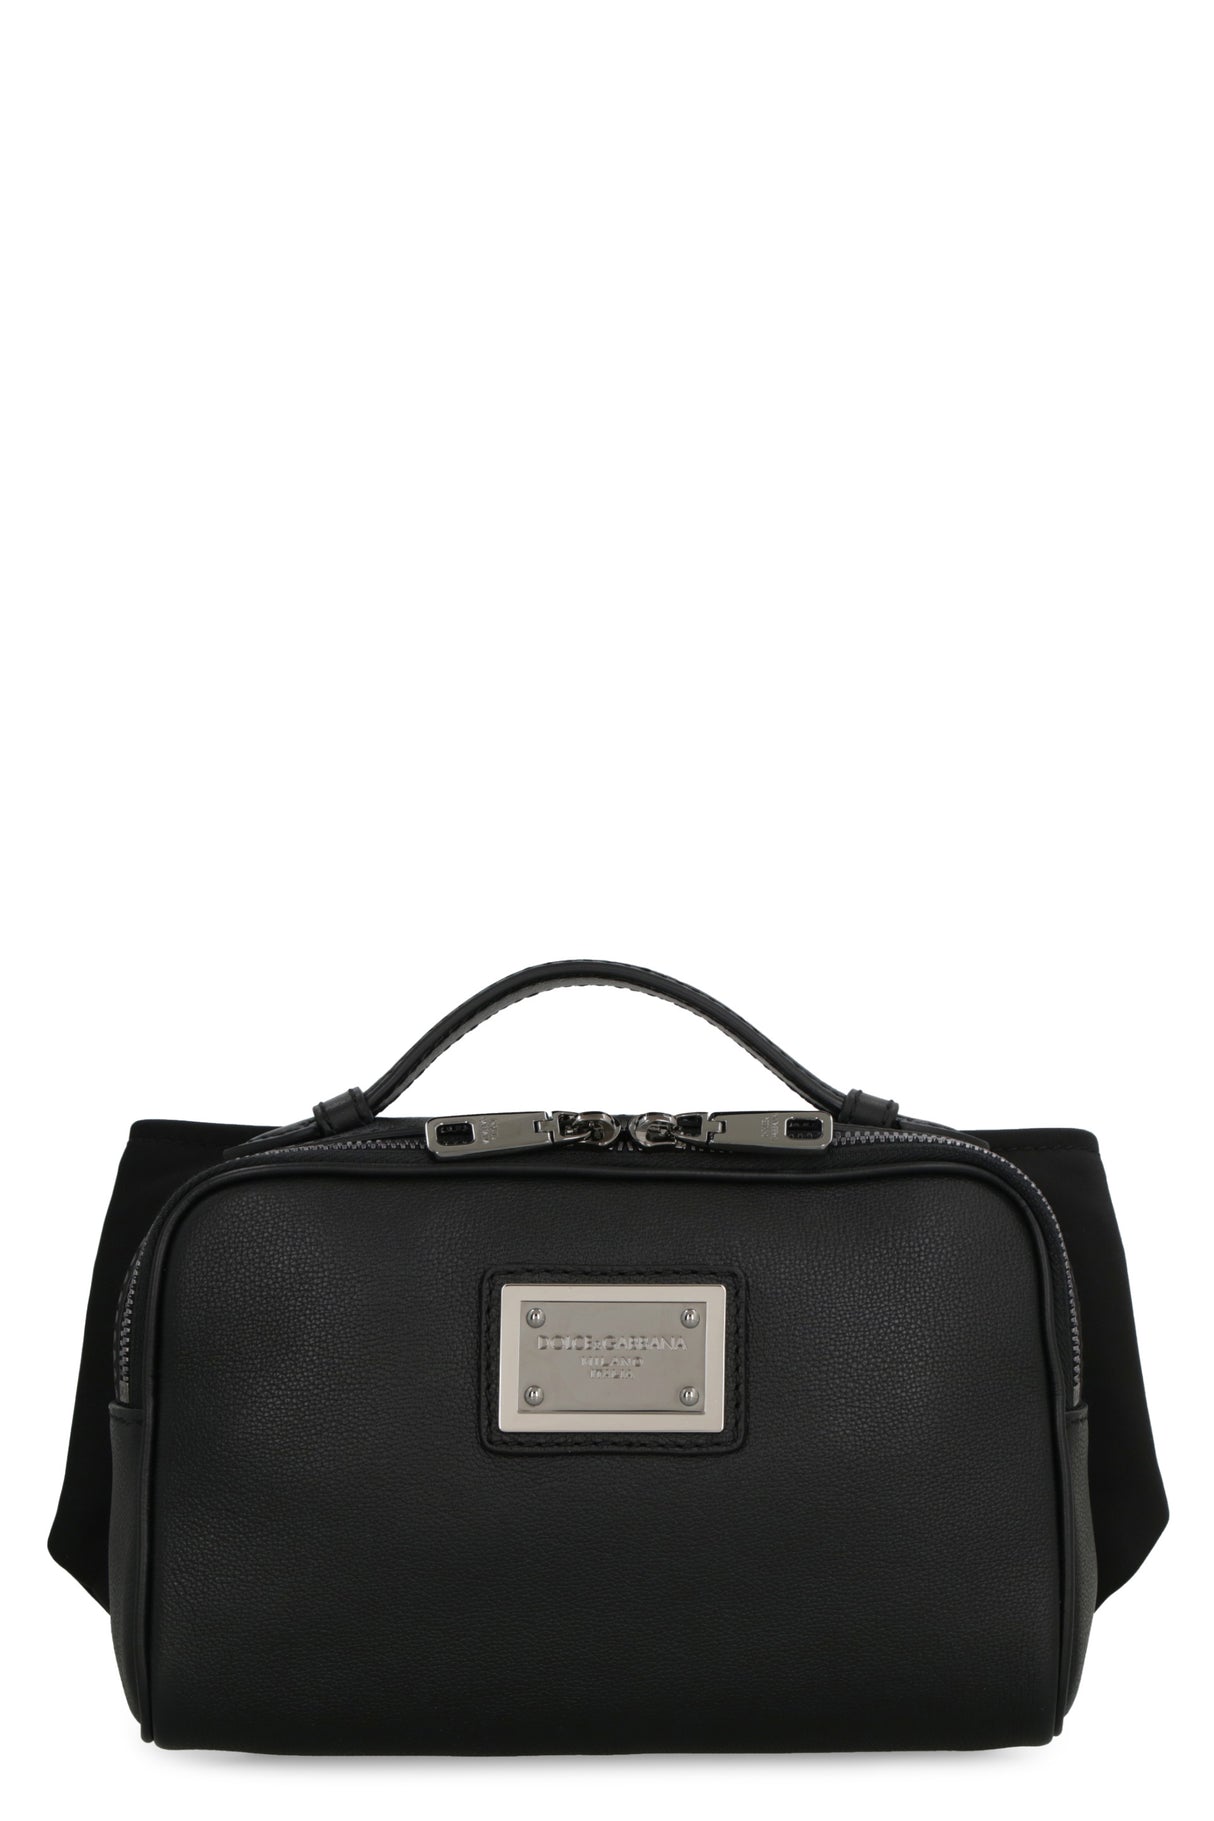 DOLCE & GABBANA Men's Leather Belt Handbag - FW23 Collection